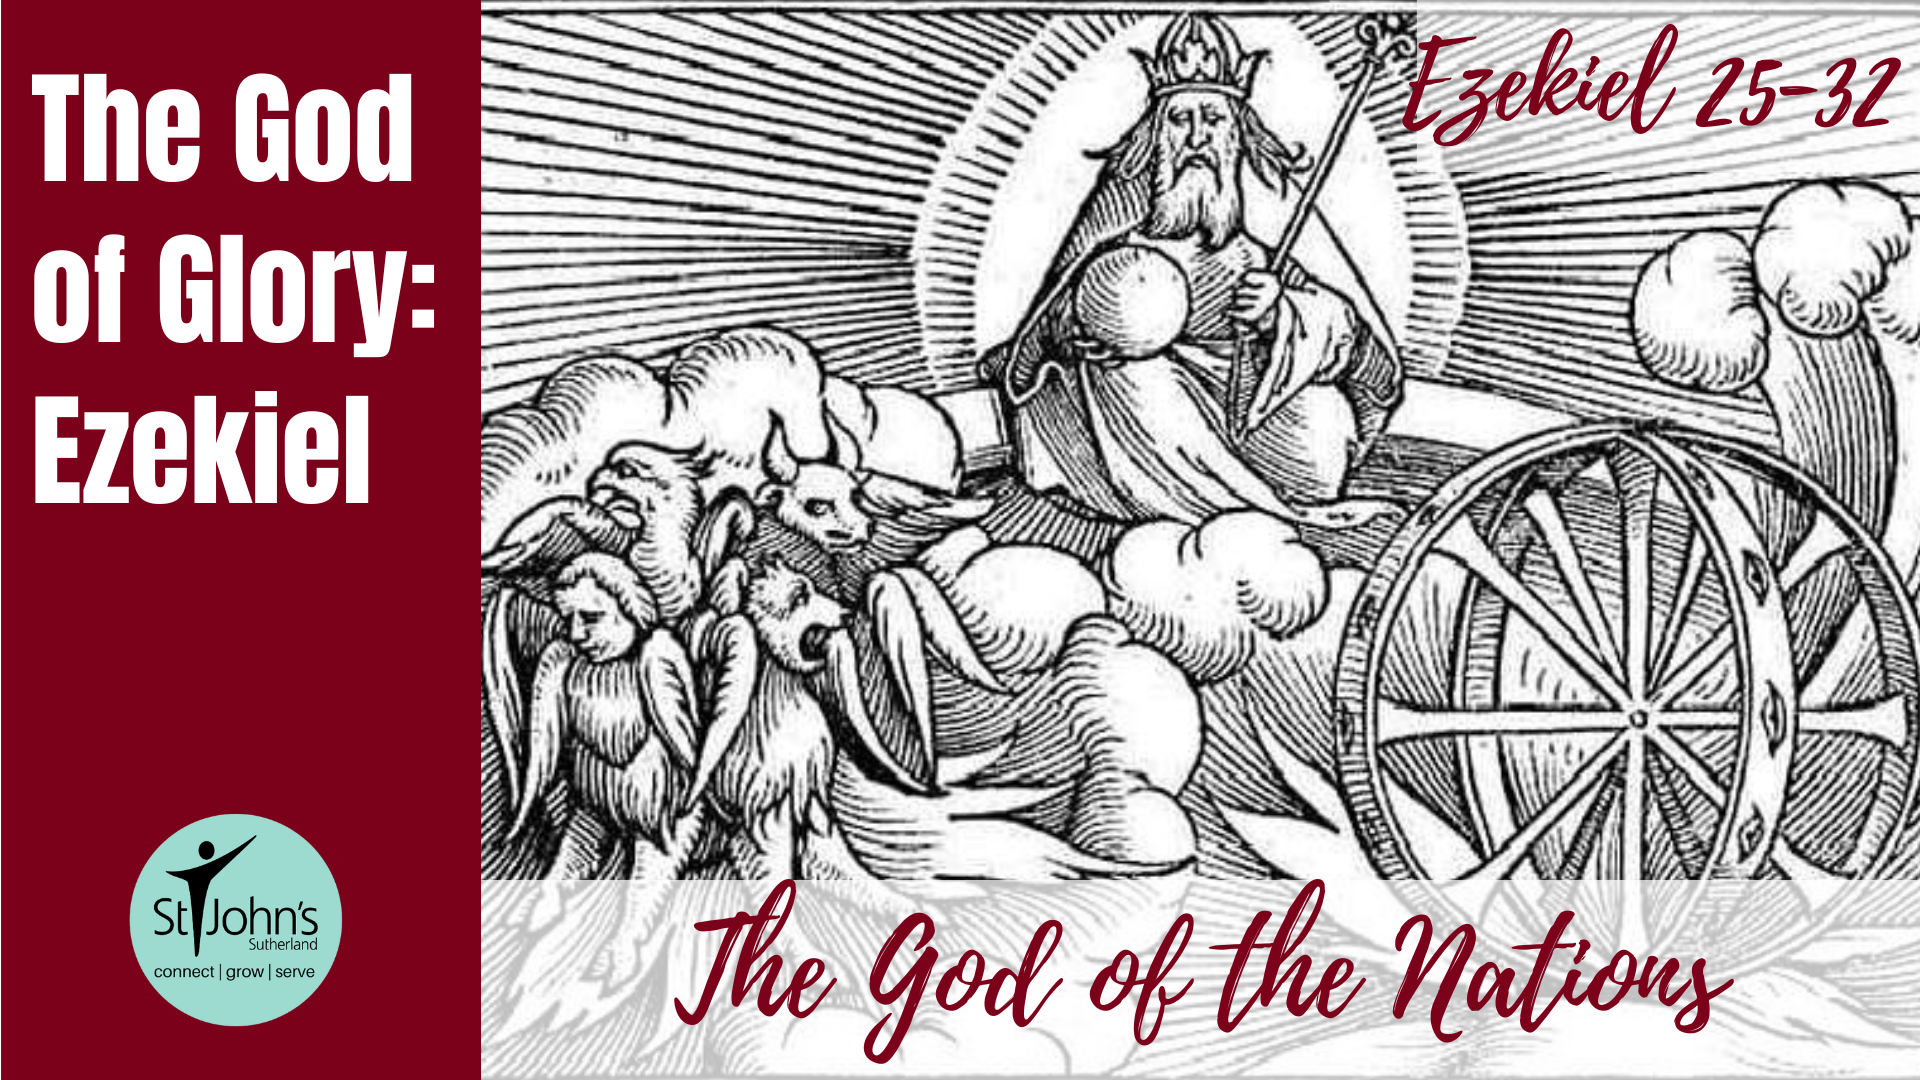 The God of the Nations: Ezekiel 25-32